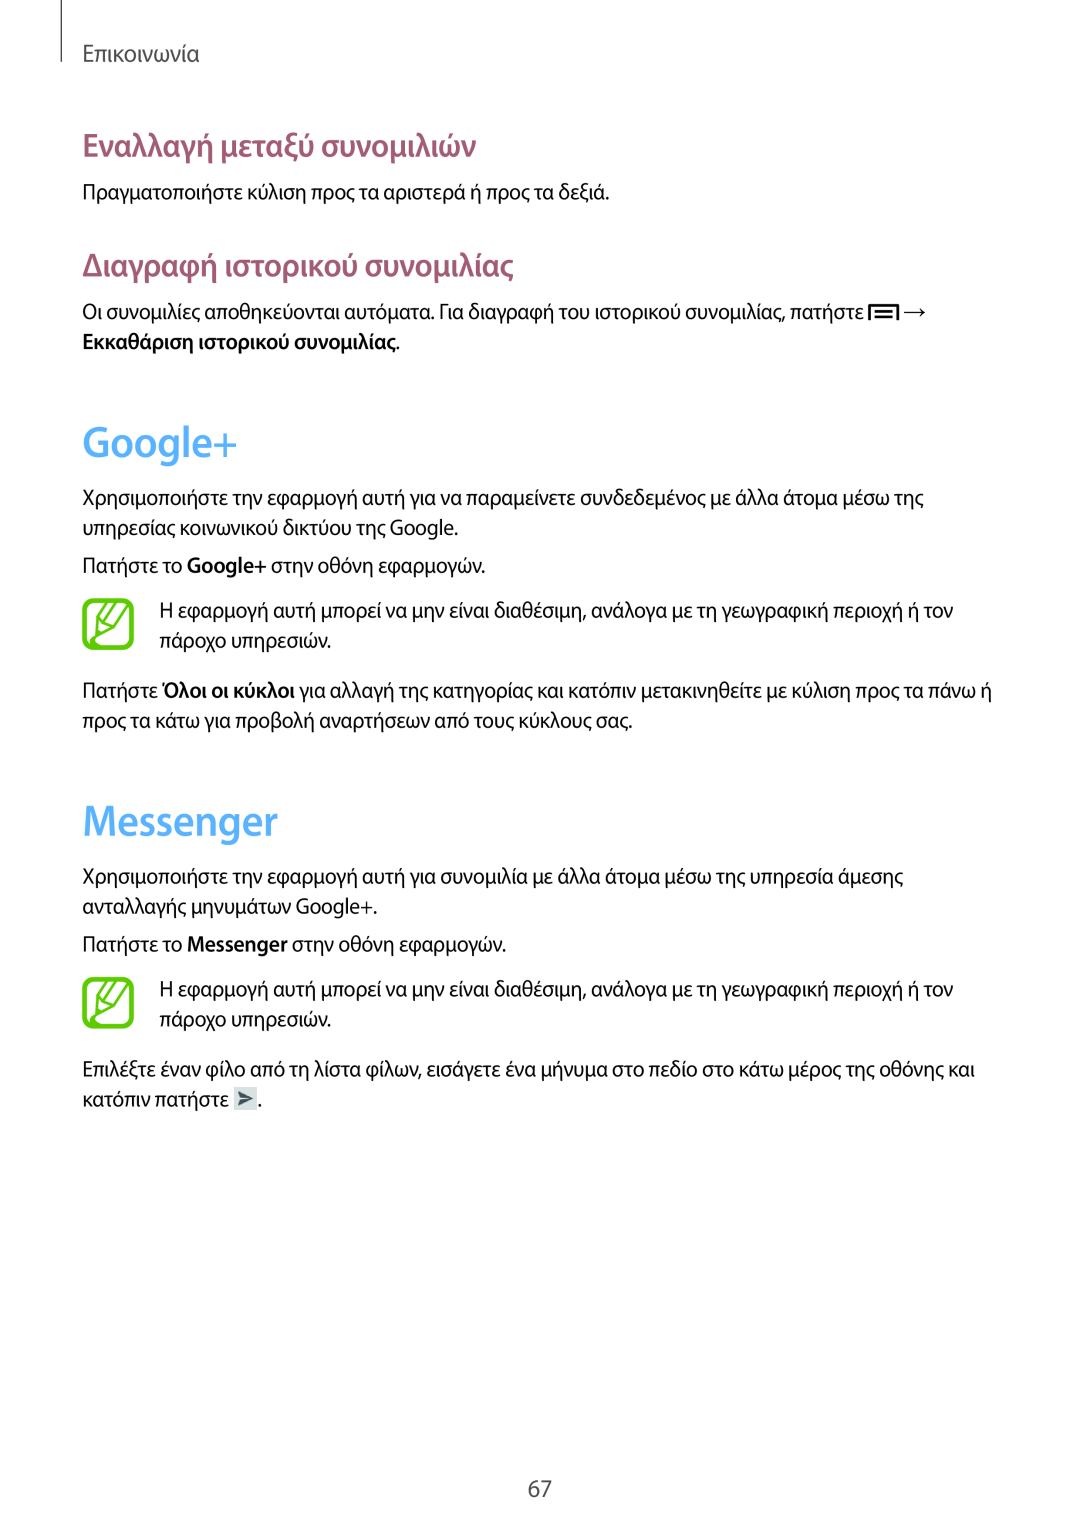 Samsung GT-N7100TAXEUR manual Google+, Messenger, Εναλλαγή μεταξύ συνομιλιών, Διαγραφή ιστορικού συνομιλίας, Επικοινωνία 